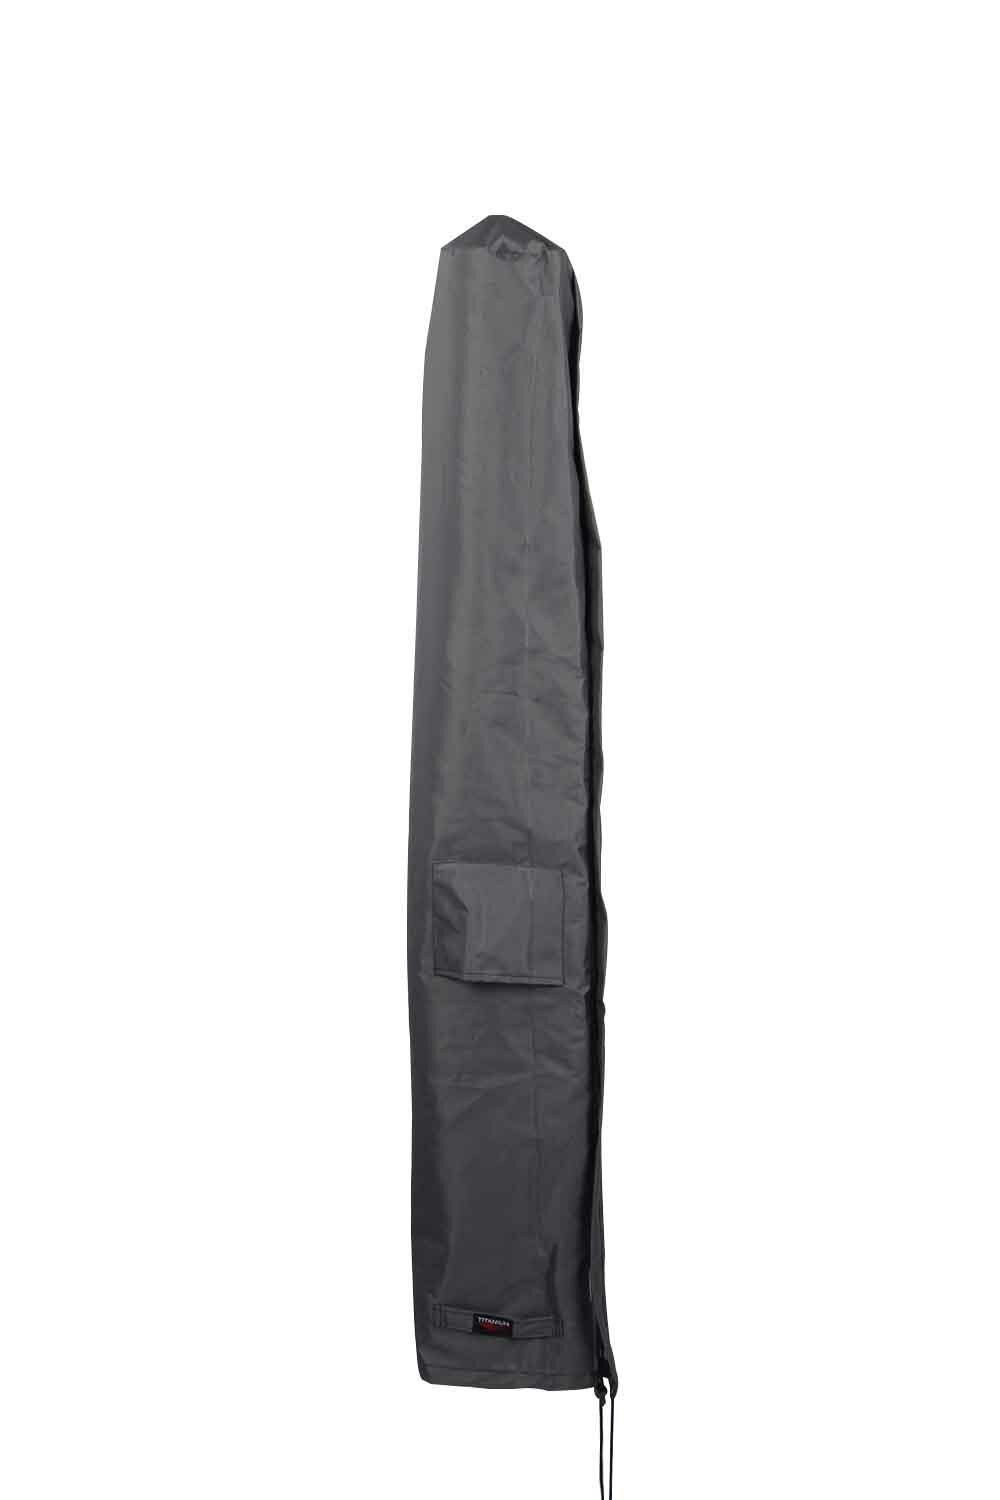 Astella Titanium Shield Outdoor Water Resistant Patio Umbrella Cover Reviews Wayfair